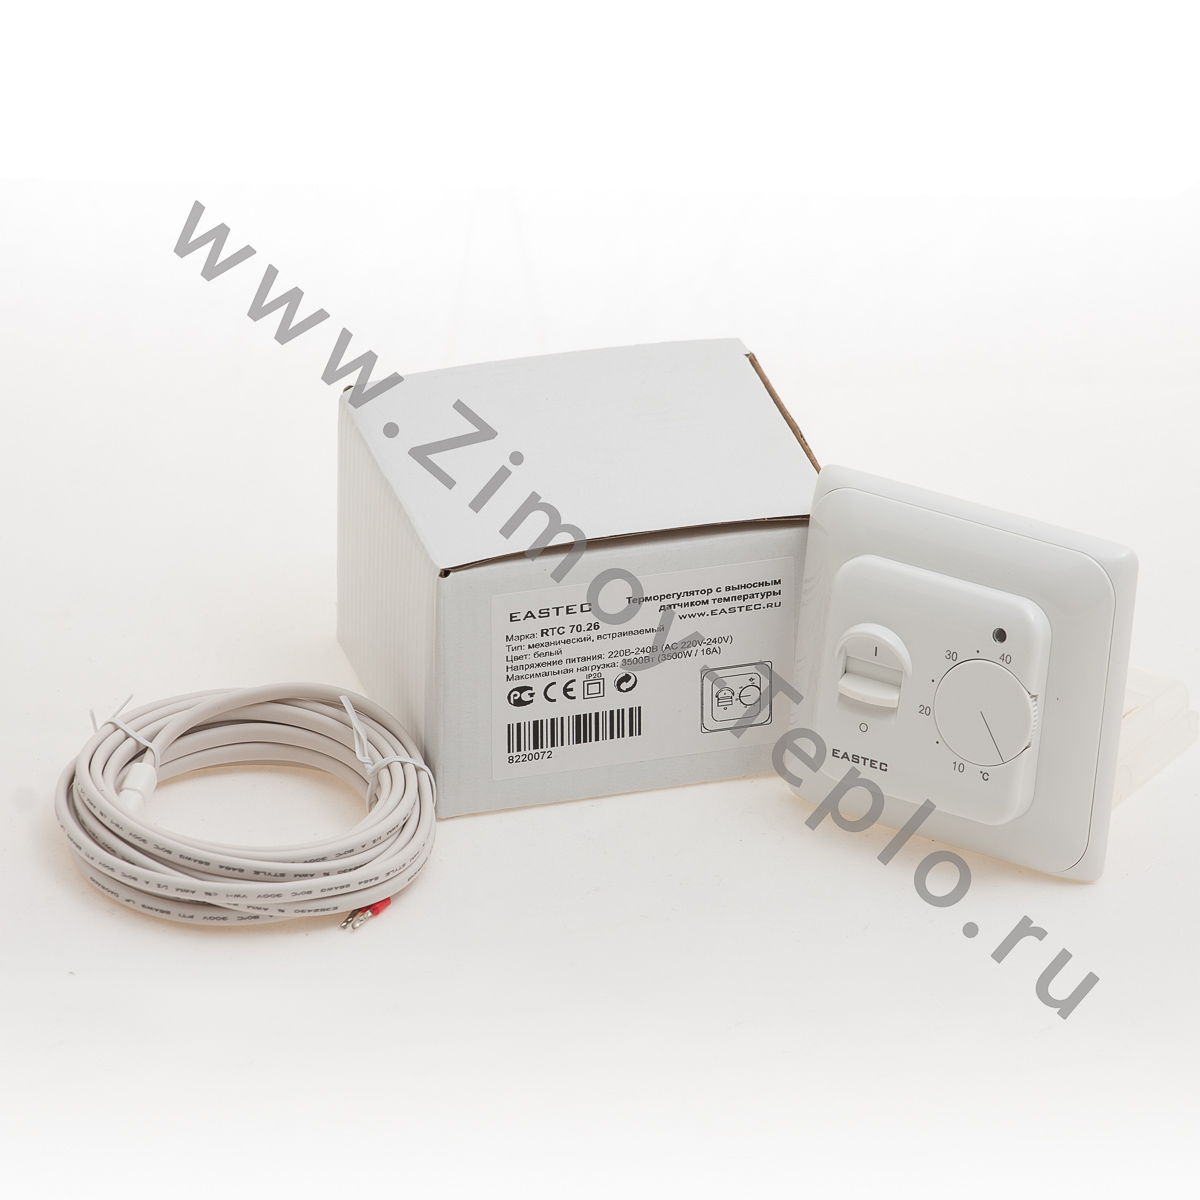 EASTEC 70.26 (белый) терморегулятор непрограммируемый, электронный